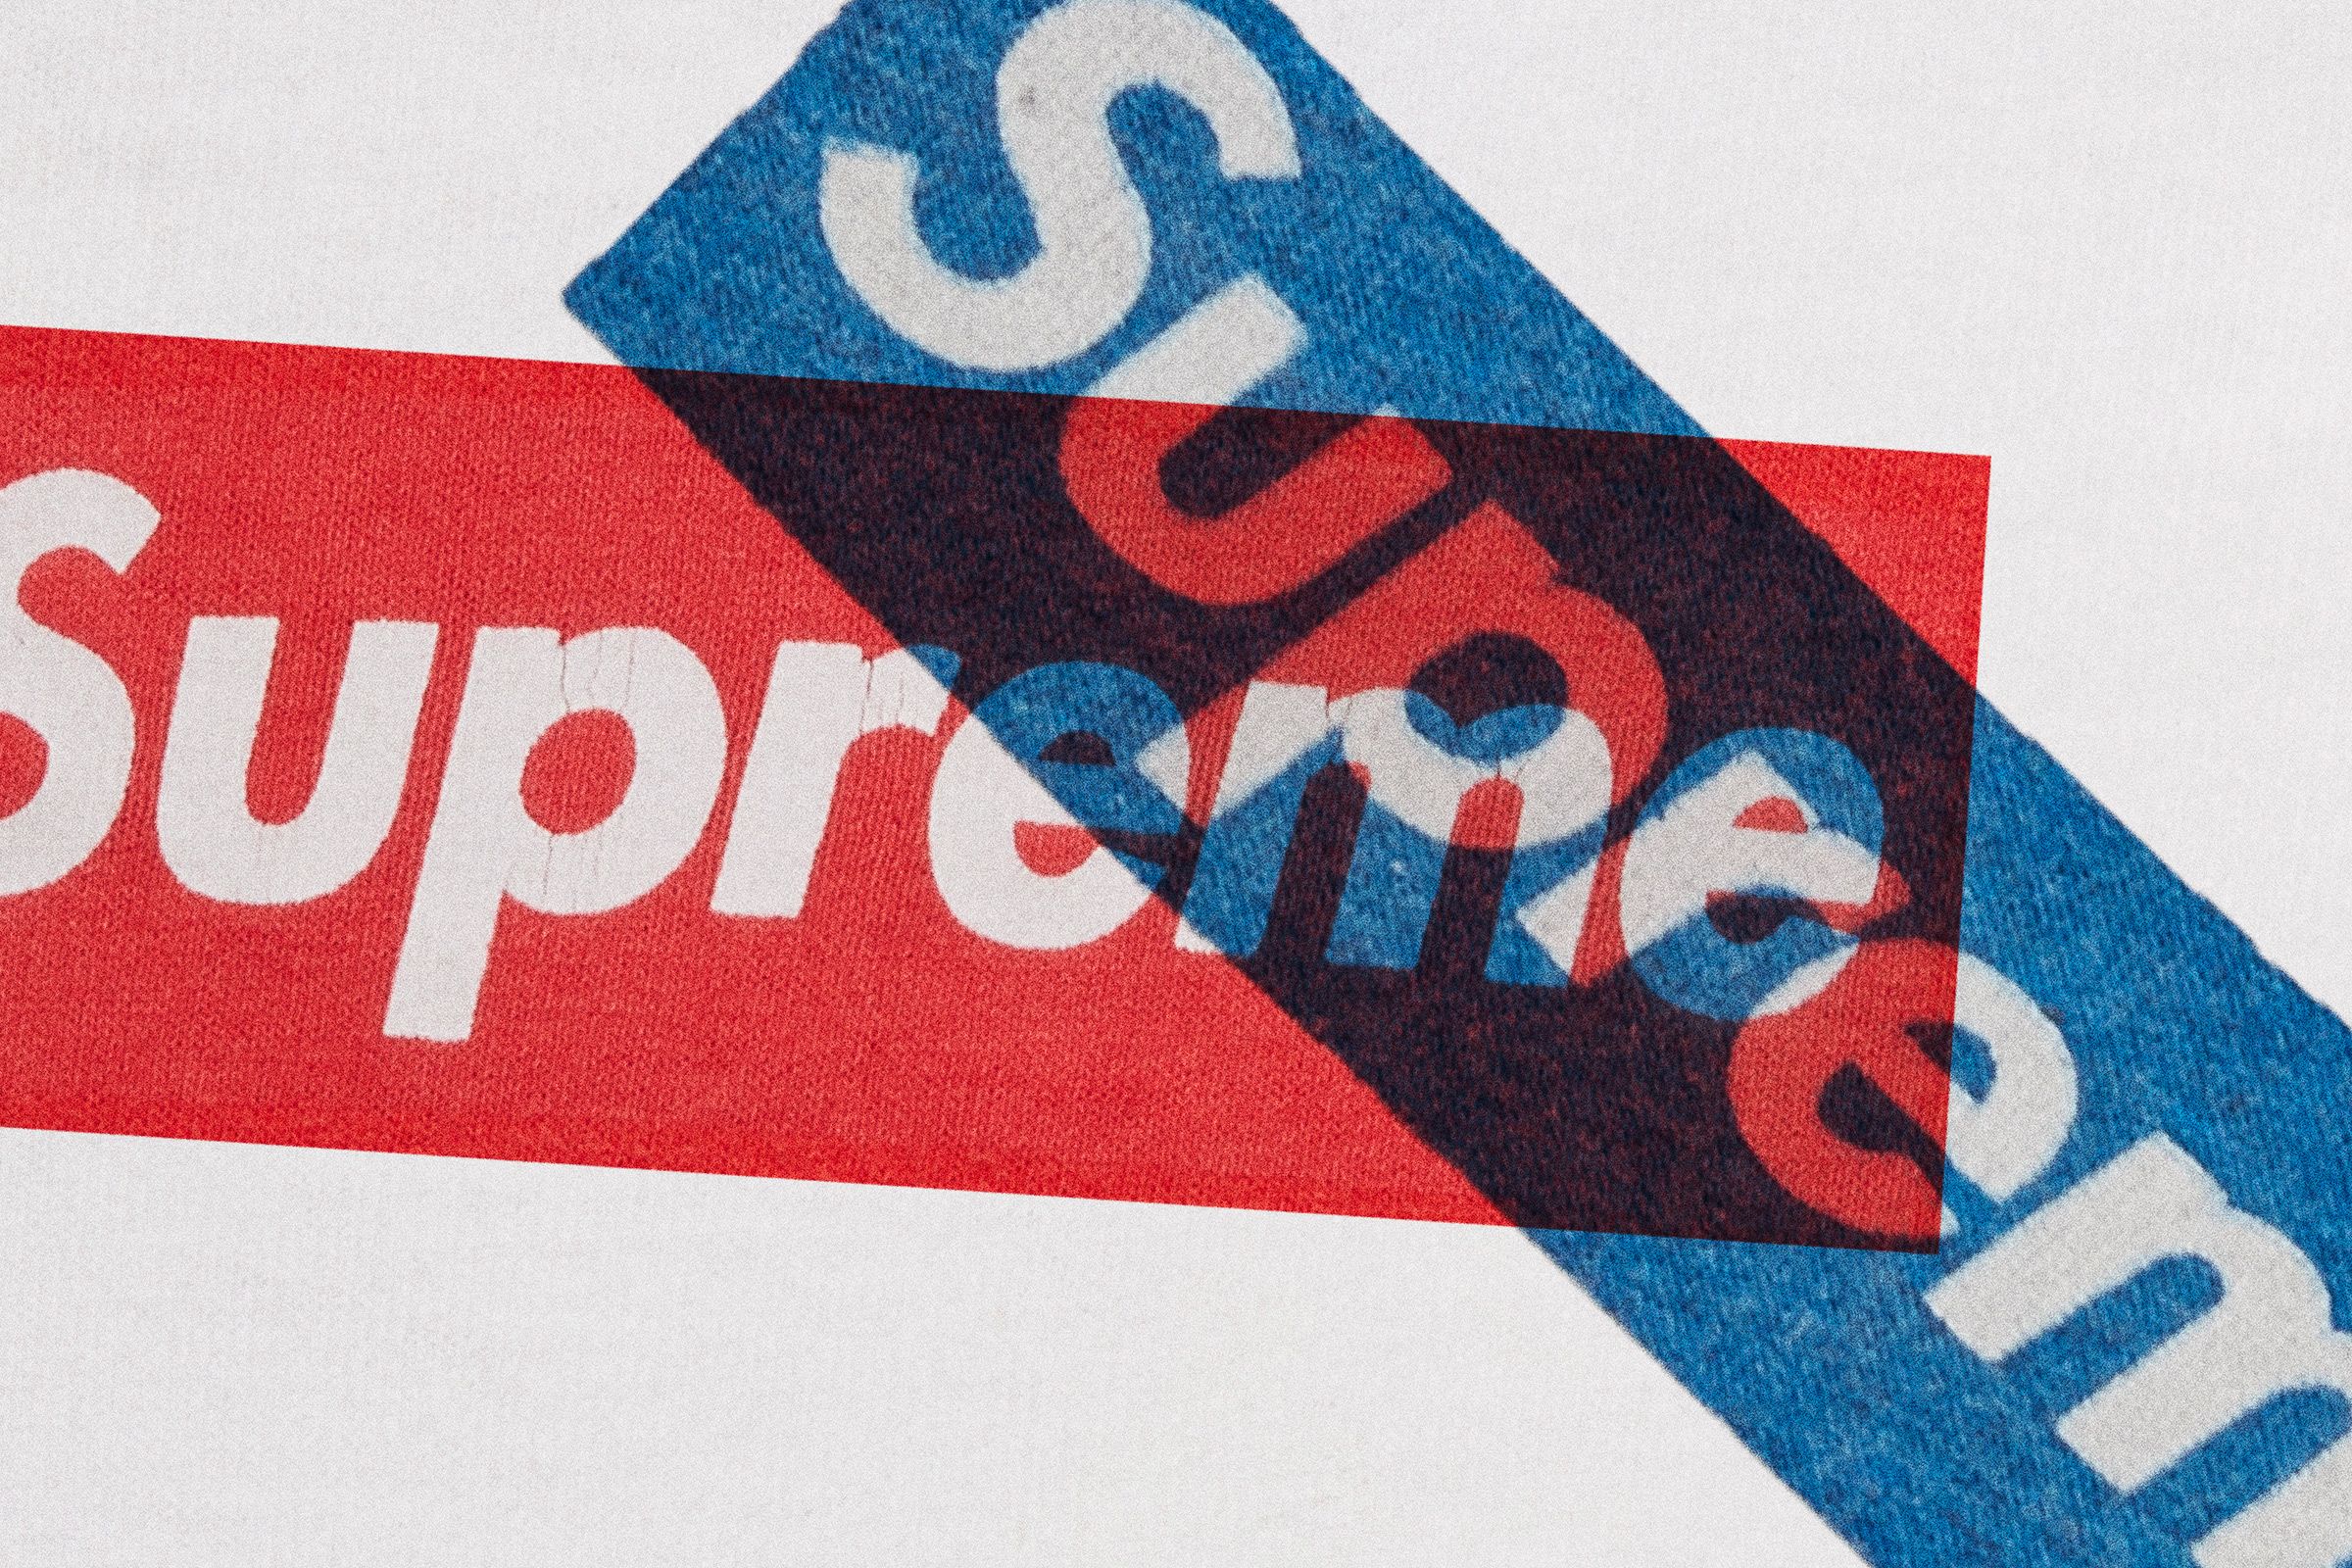 hoodie supreme box logo